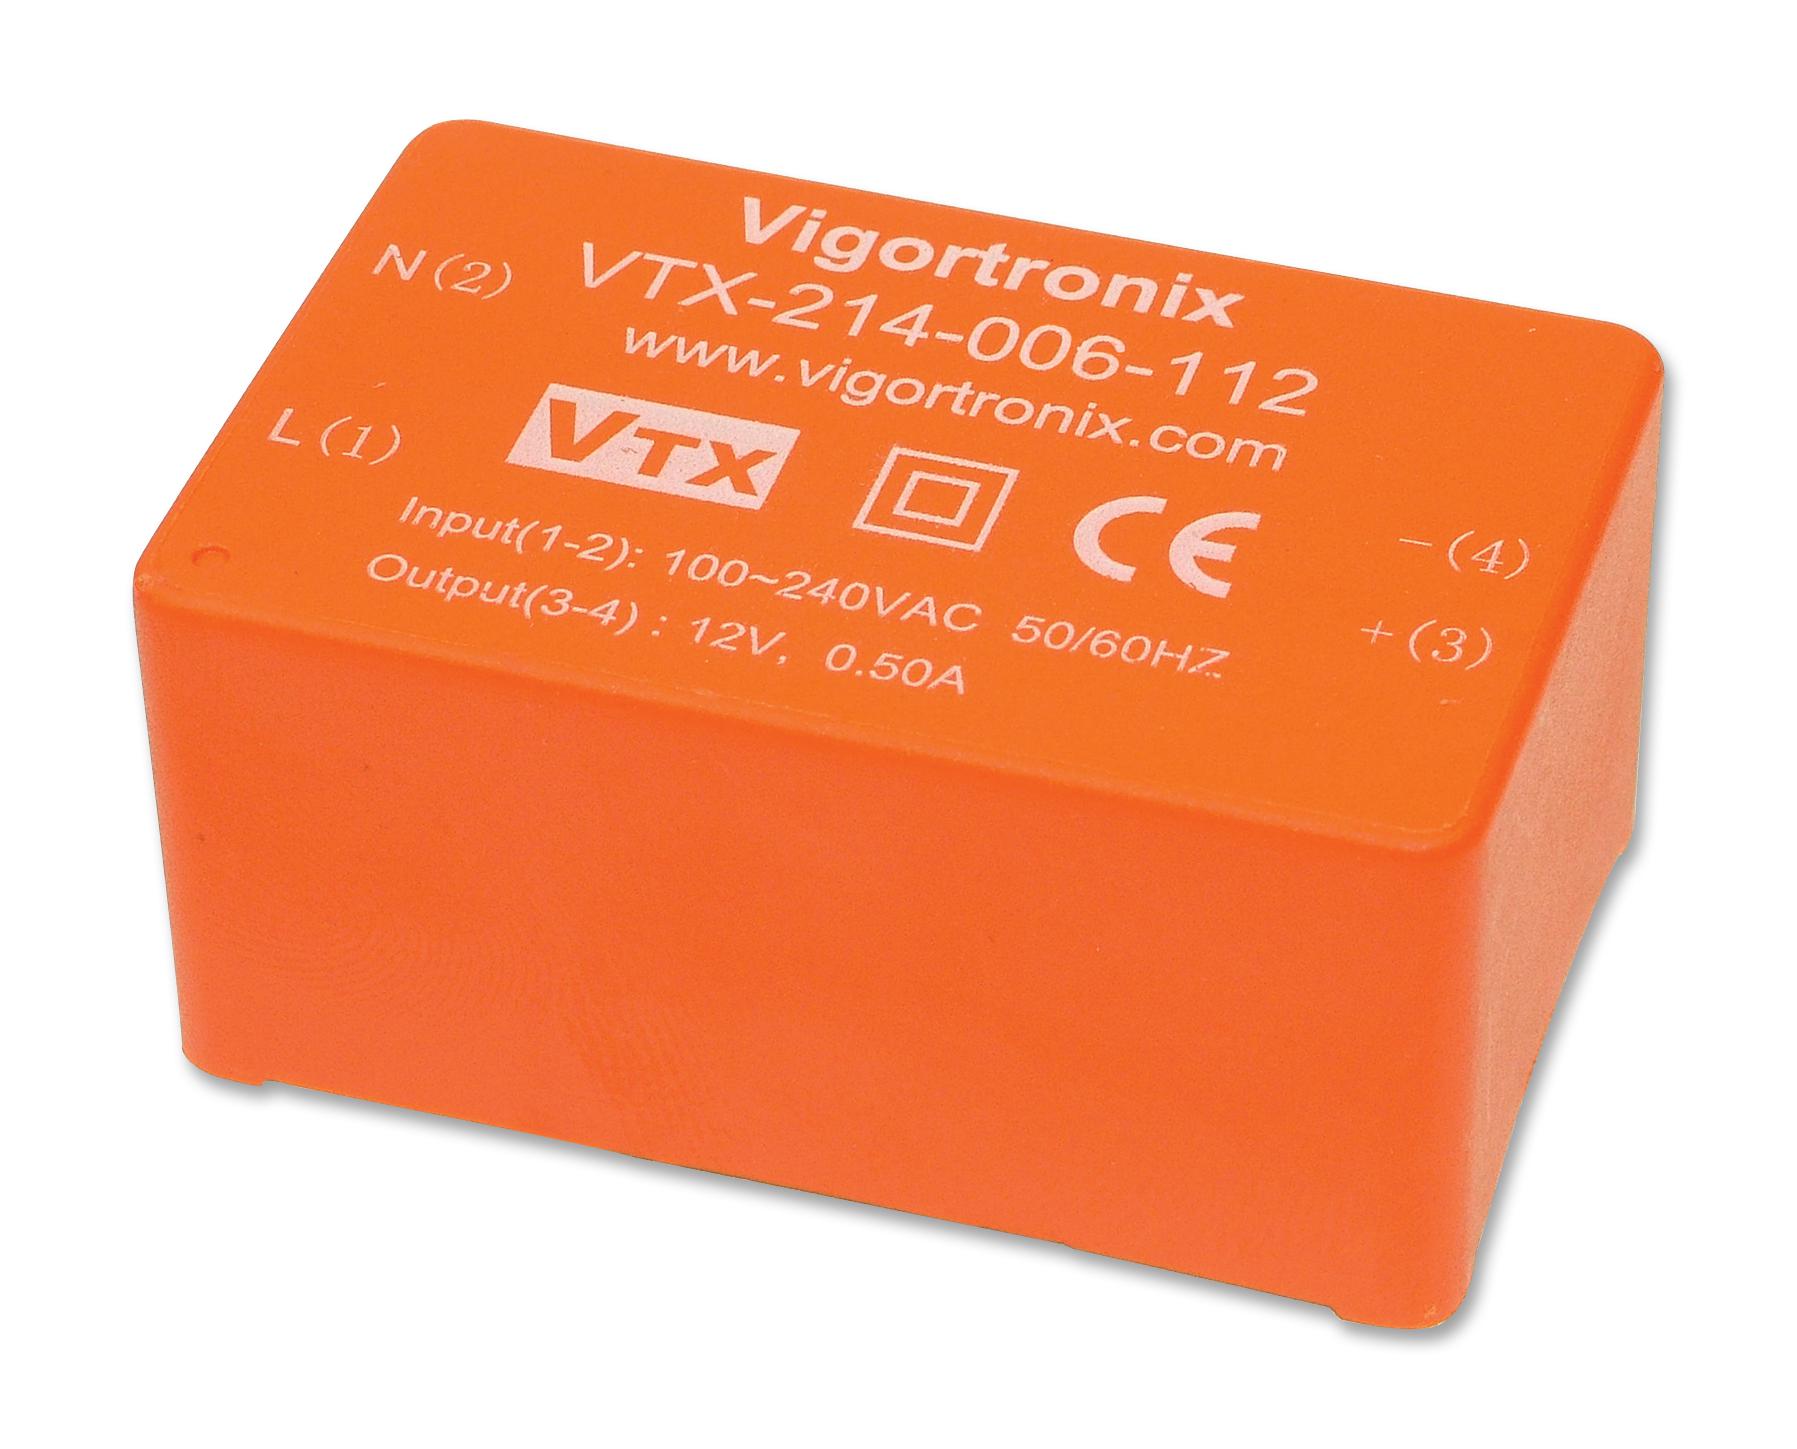 VTX-214-006-109 POWER SUPPLY, AC-DC, 9V, 0.666A VIGORTRONIX